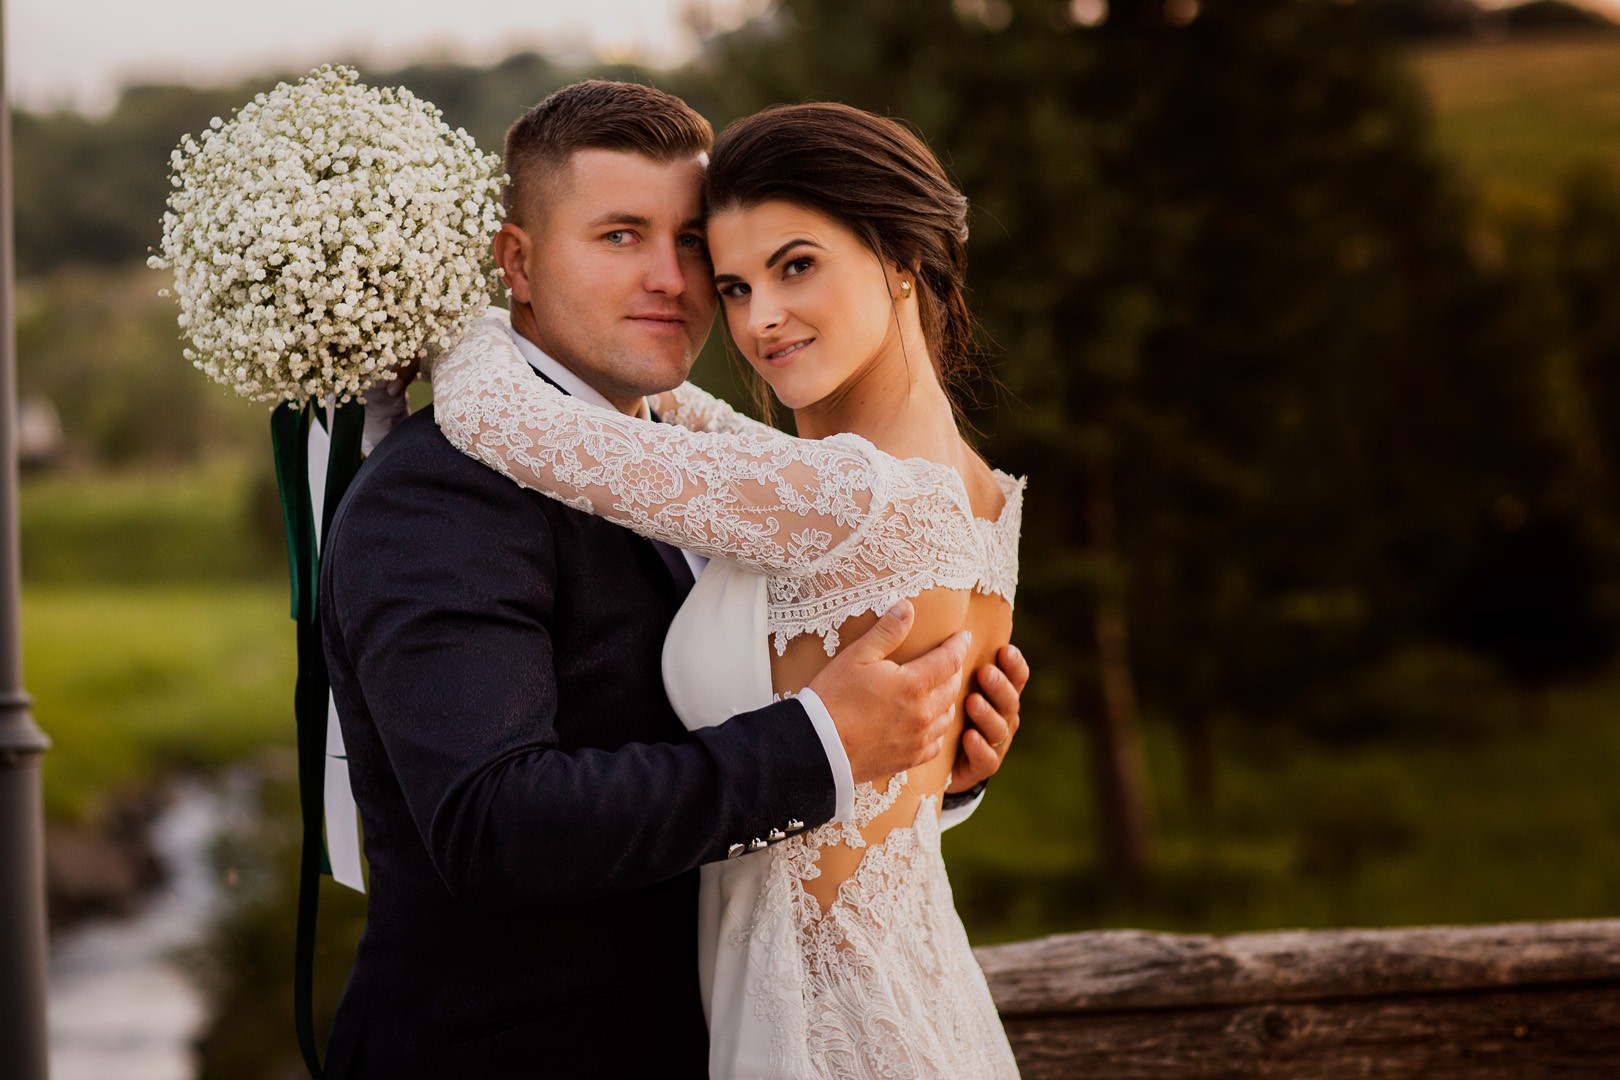 Photo from the wedding of Deniska and Tomáš - 0652.jpg